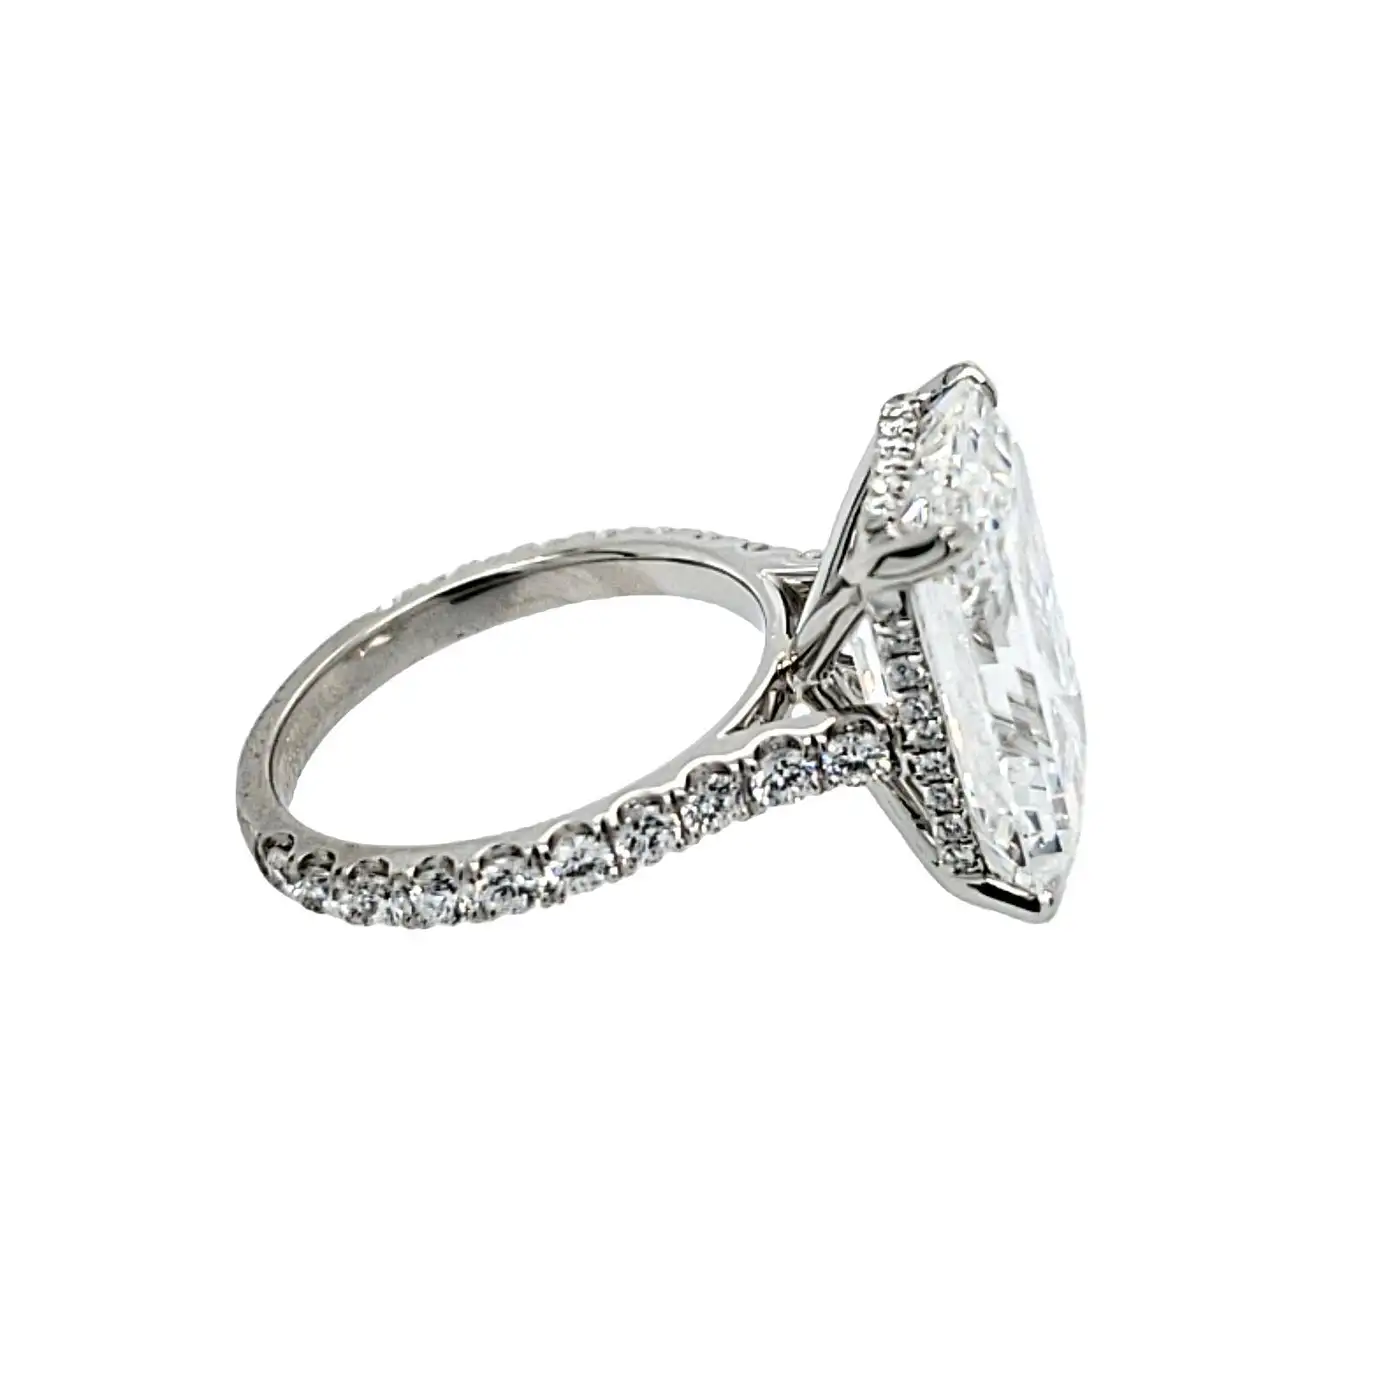 David-Rosenberg-10.41-Carat-Emerald-Cut-F-VVS2-GIA-Diamond-Engagement-Ring-8.webp